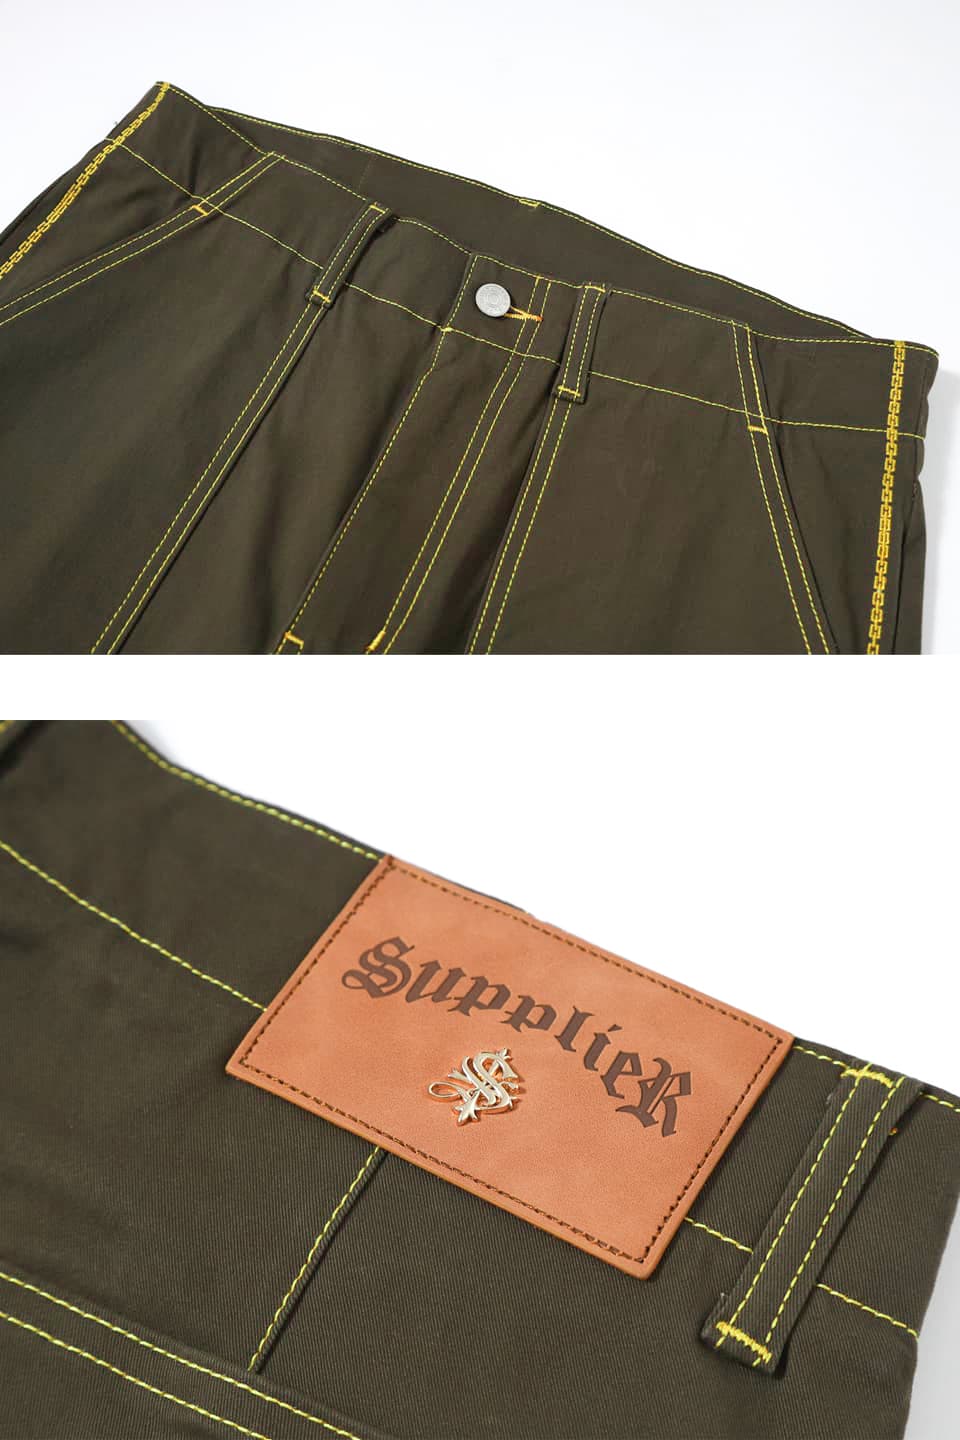 Supplier : Stitch Flare Pants Khaki